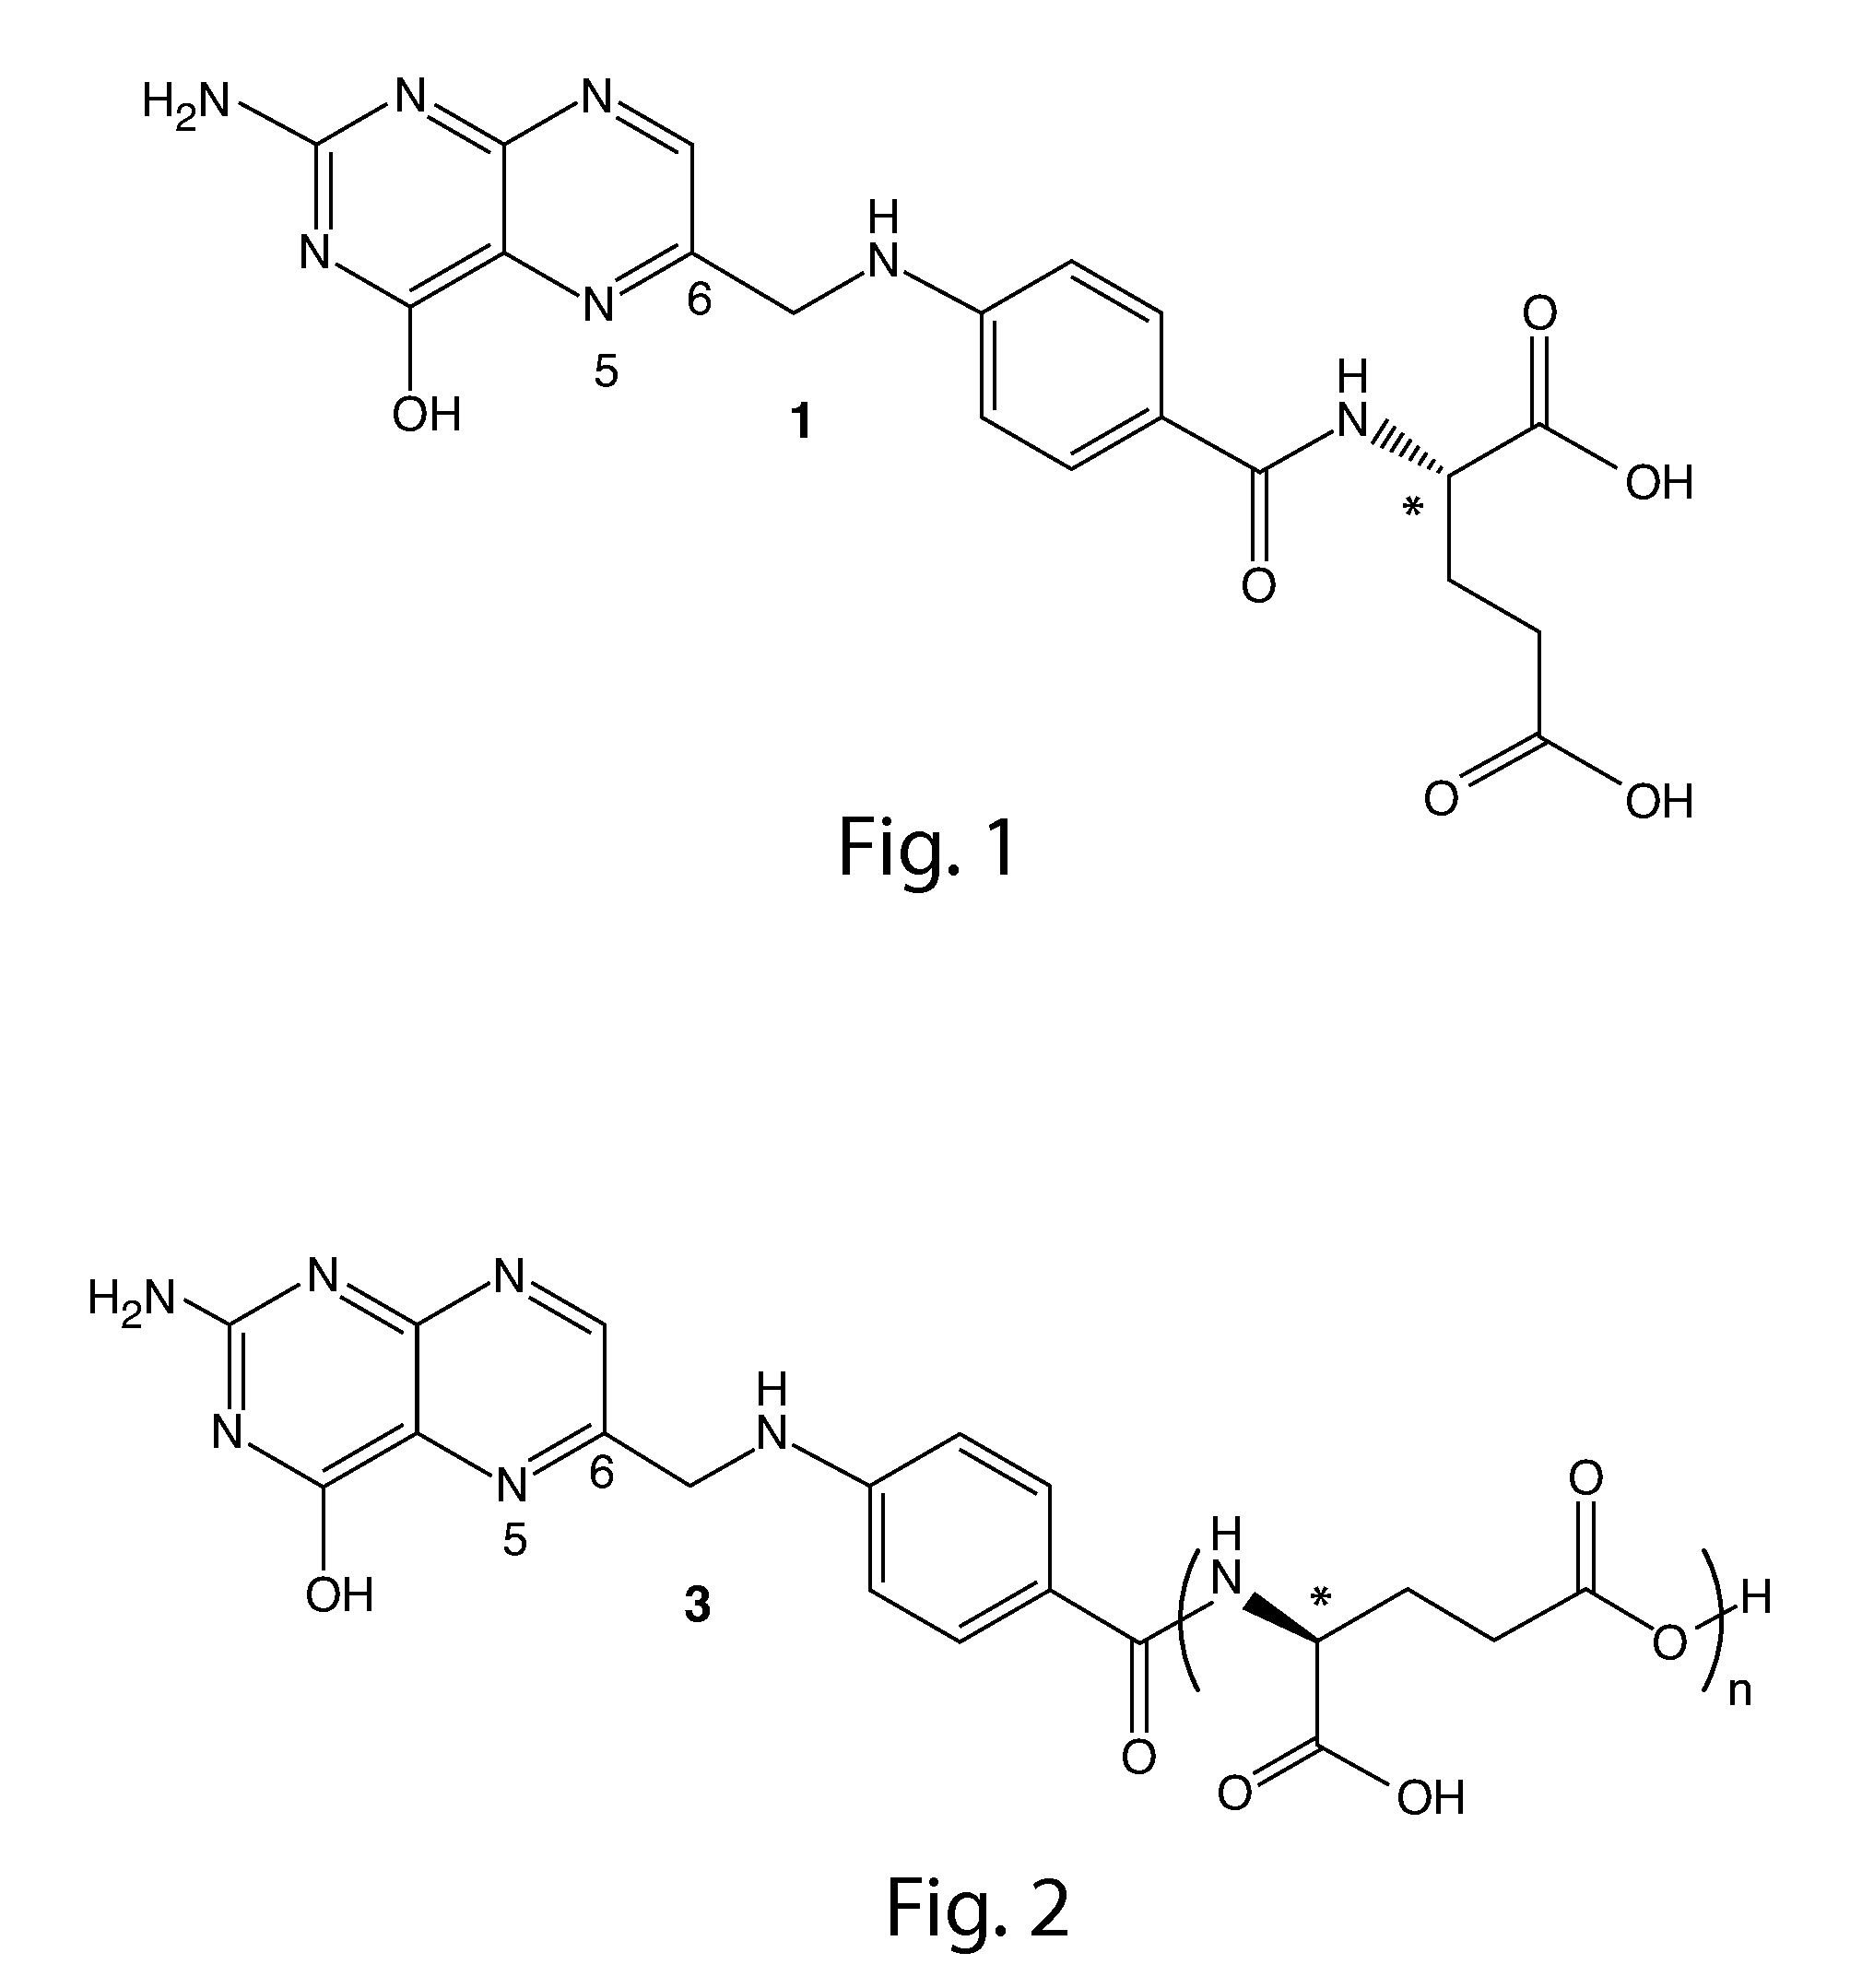 Synthesis of (6S)-5methyl-5,6,7,8-tetrahydrofolic acid